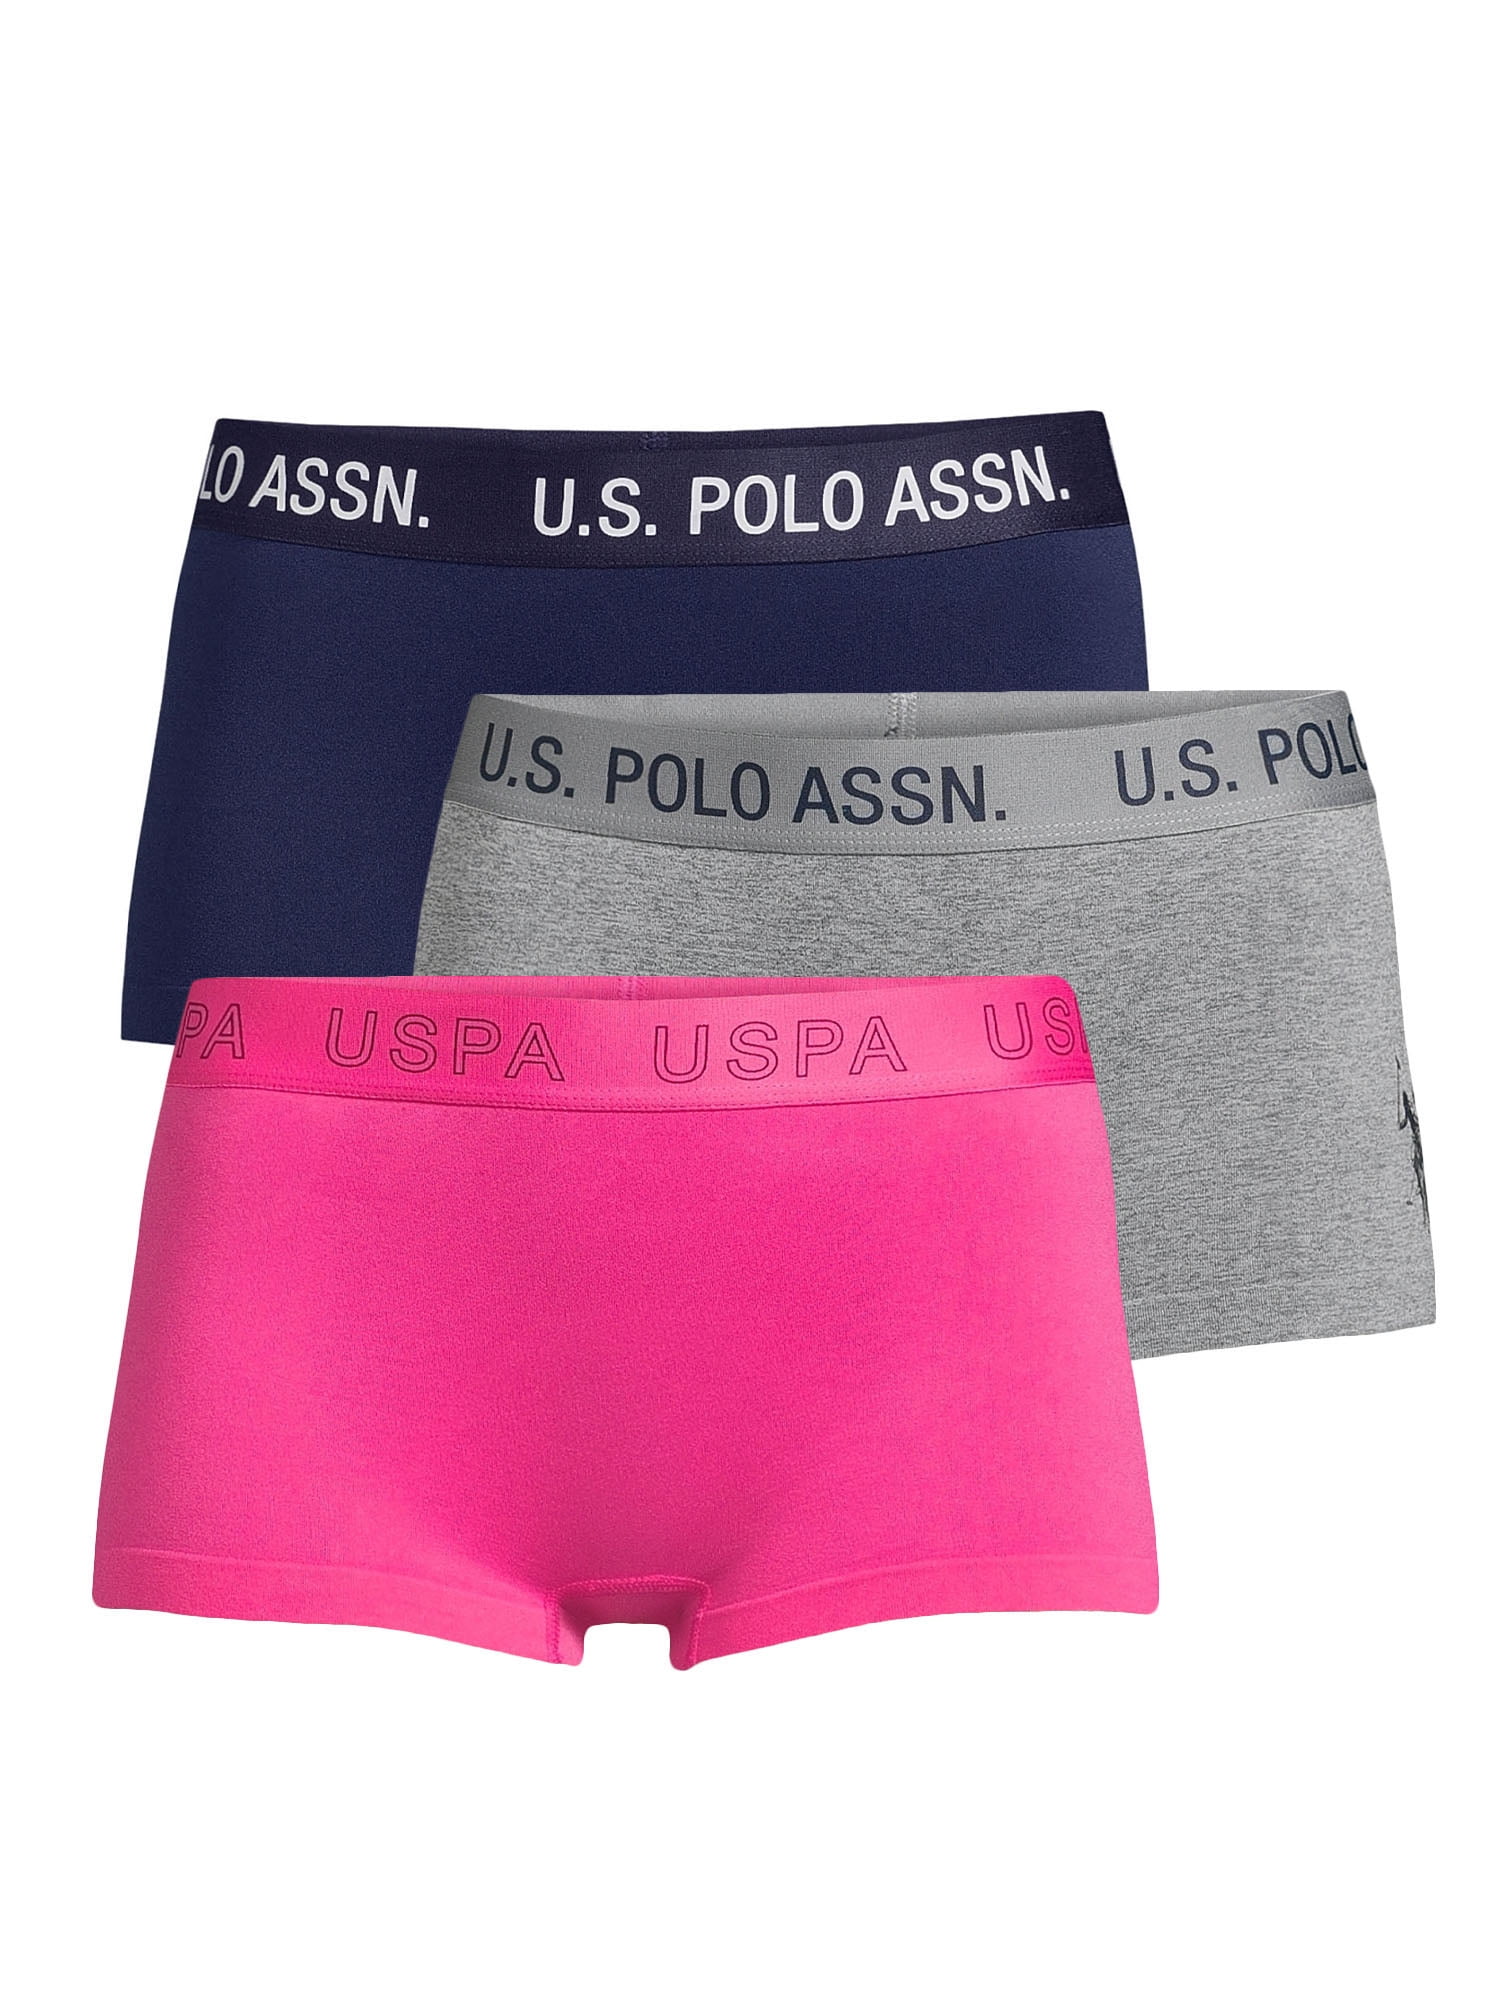 Womens Multi Pack Elastic Waist Cotton Lined Boyshort Panties Polo Assn U.S 